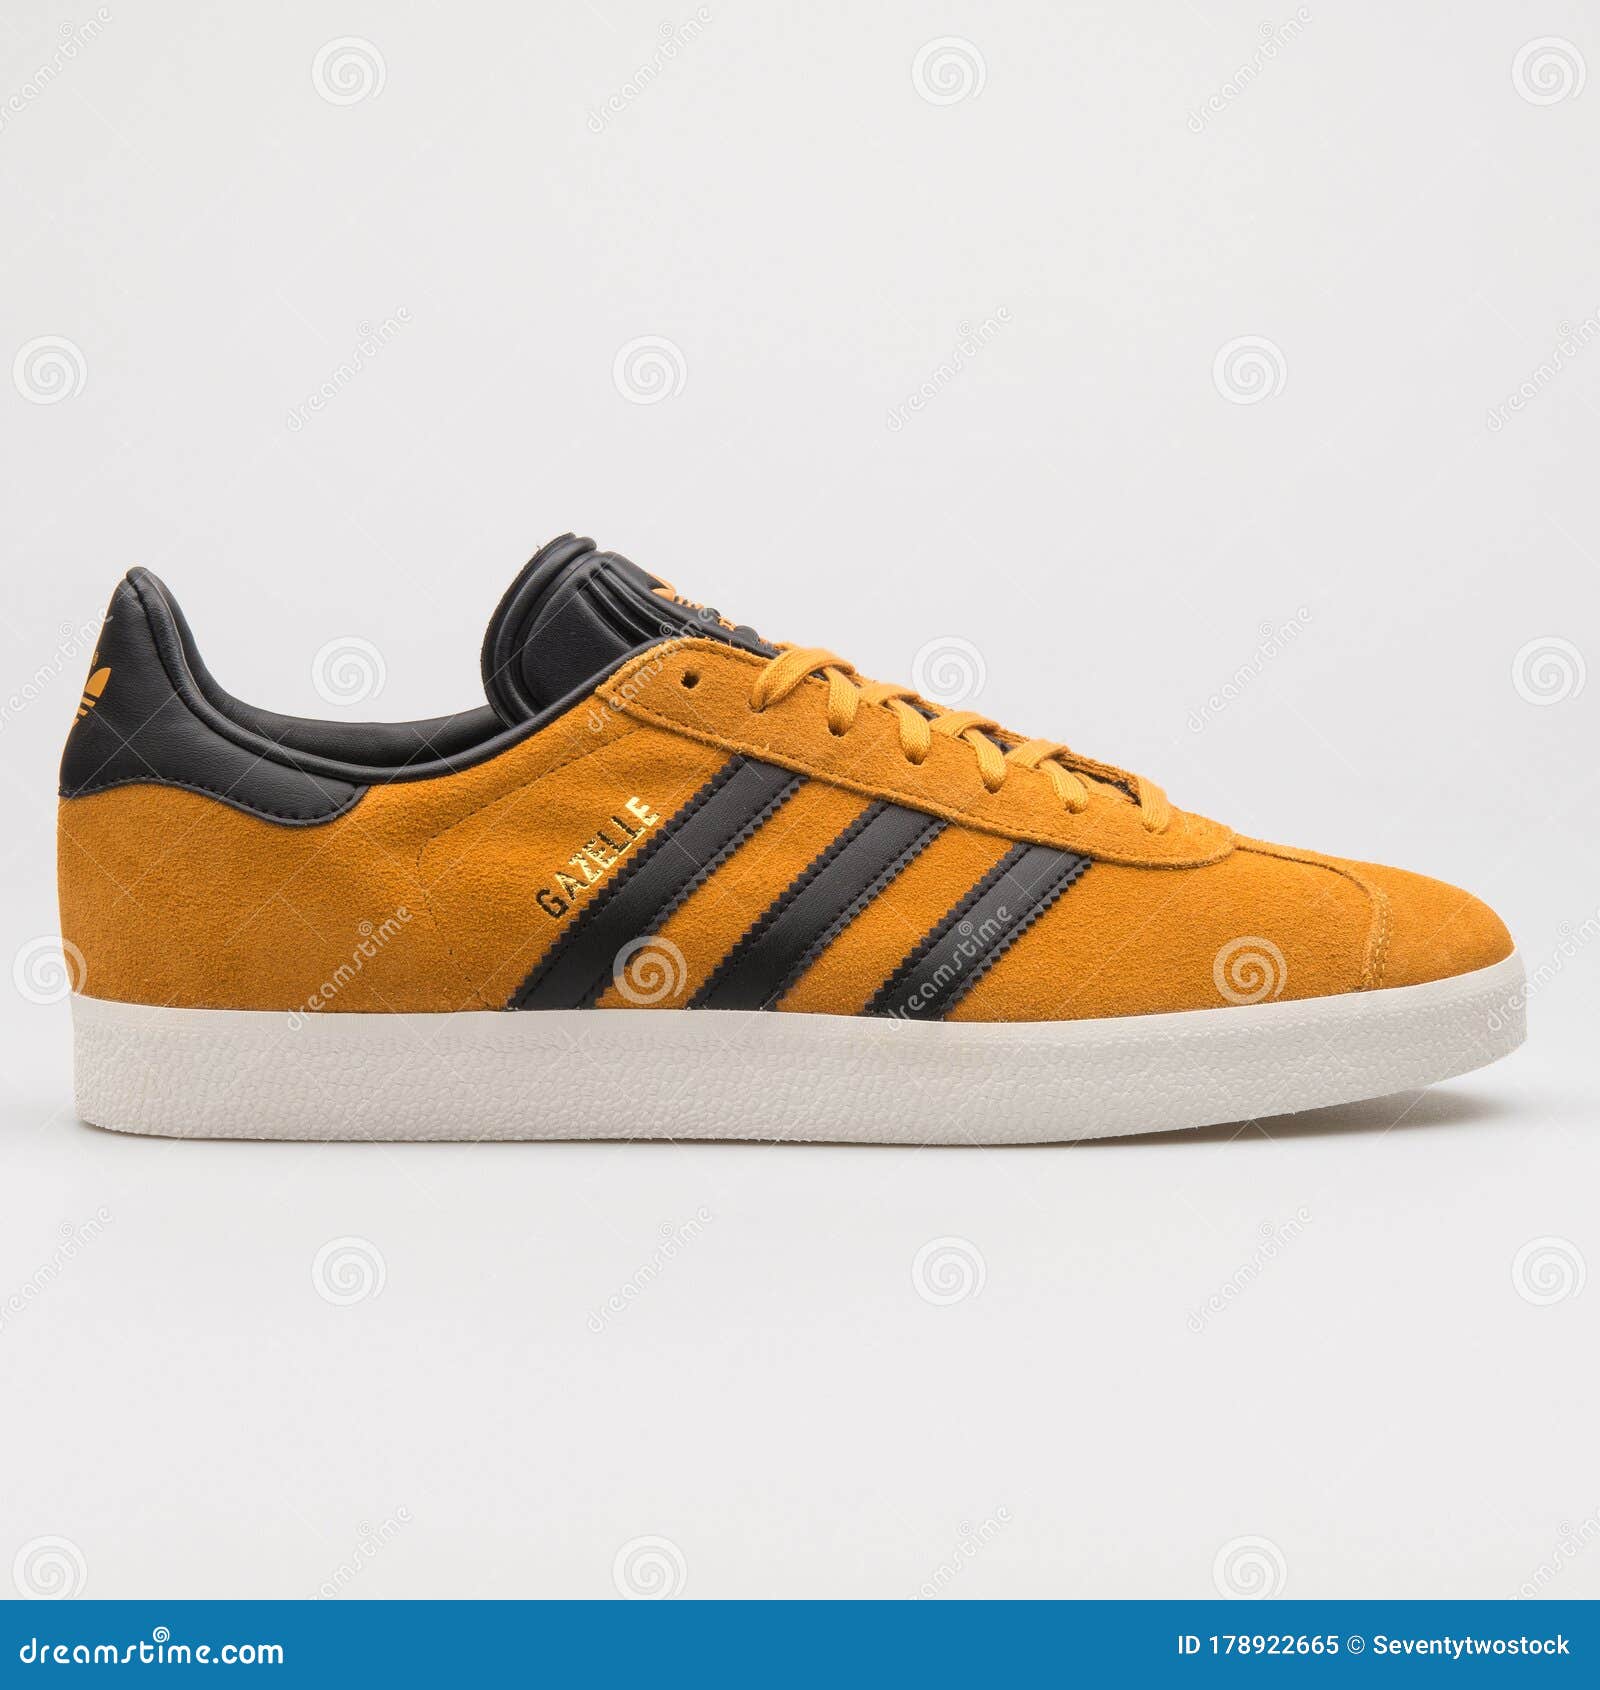 Adidas Gazelle Gold and Black Sneaker Image - Image of athletic, item: